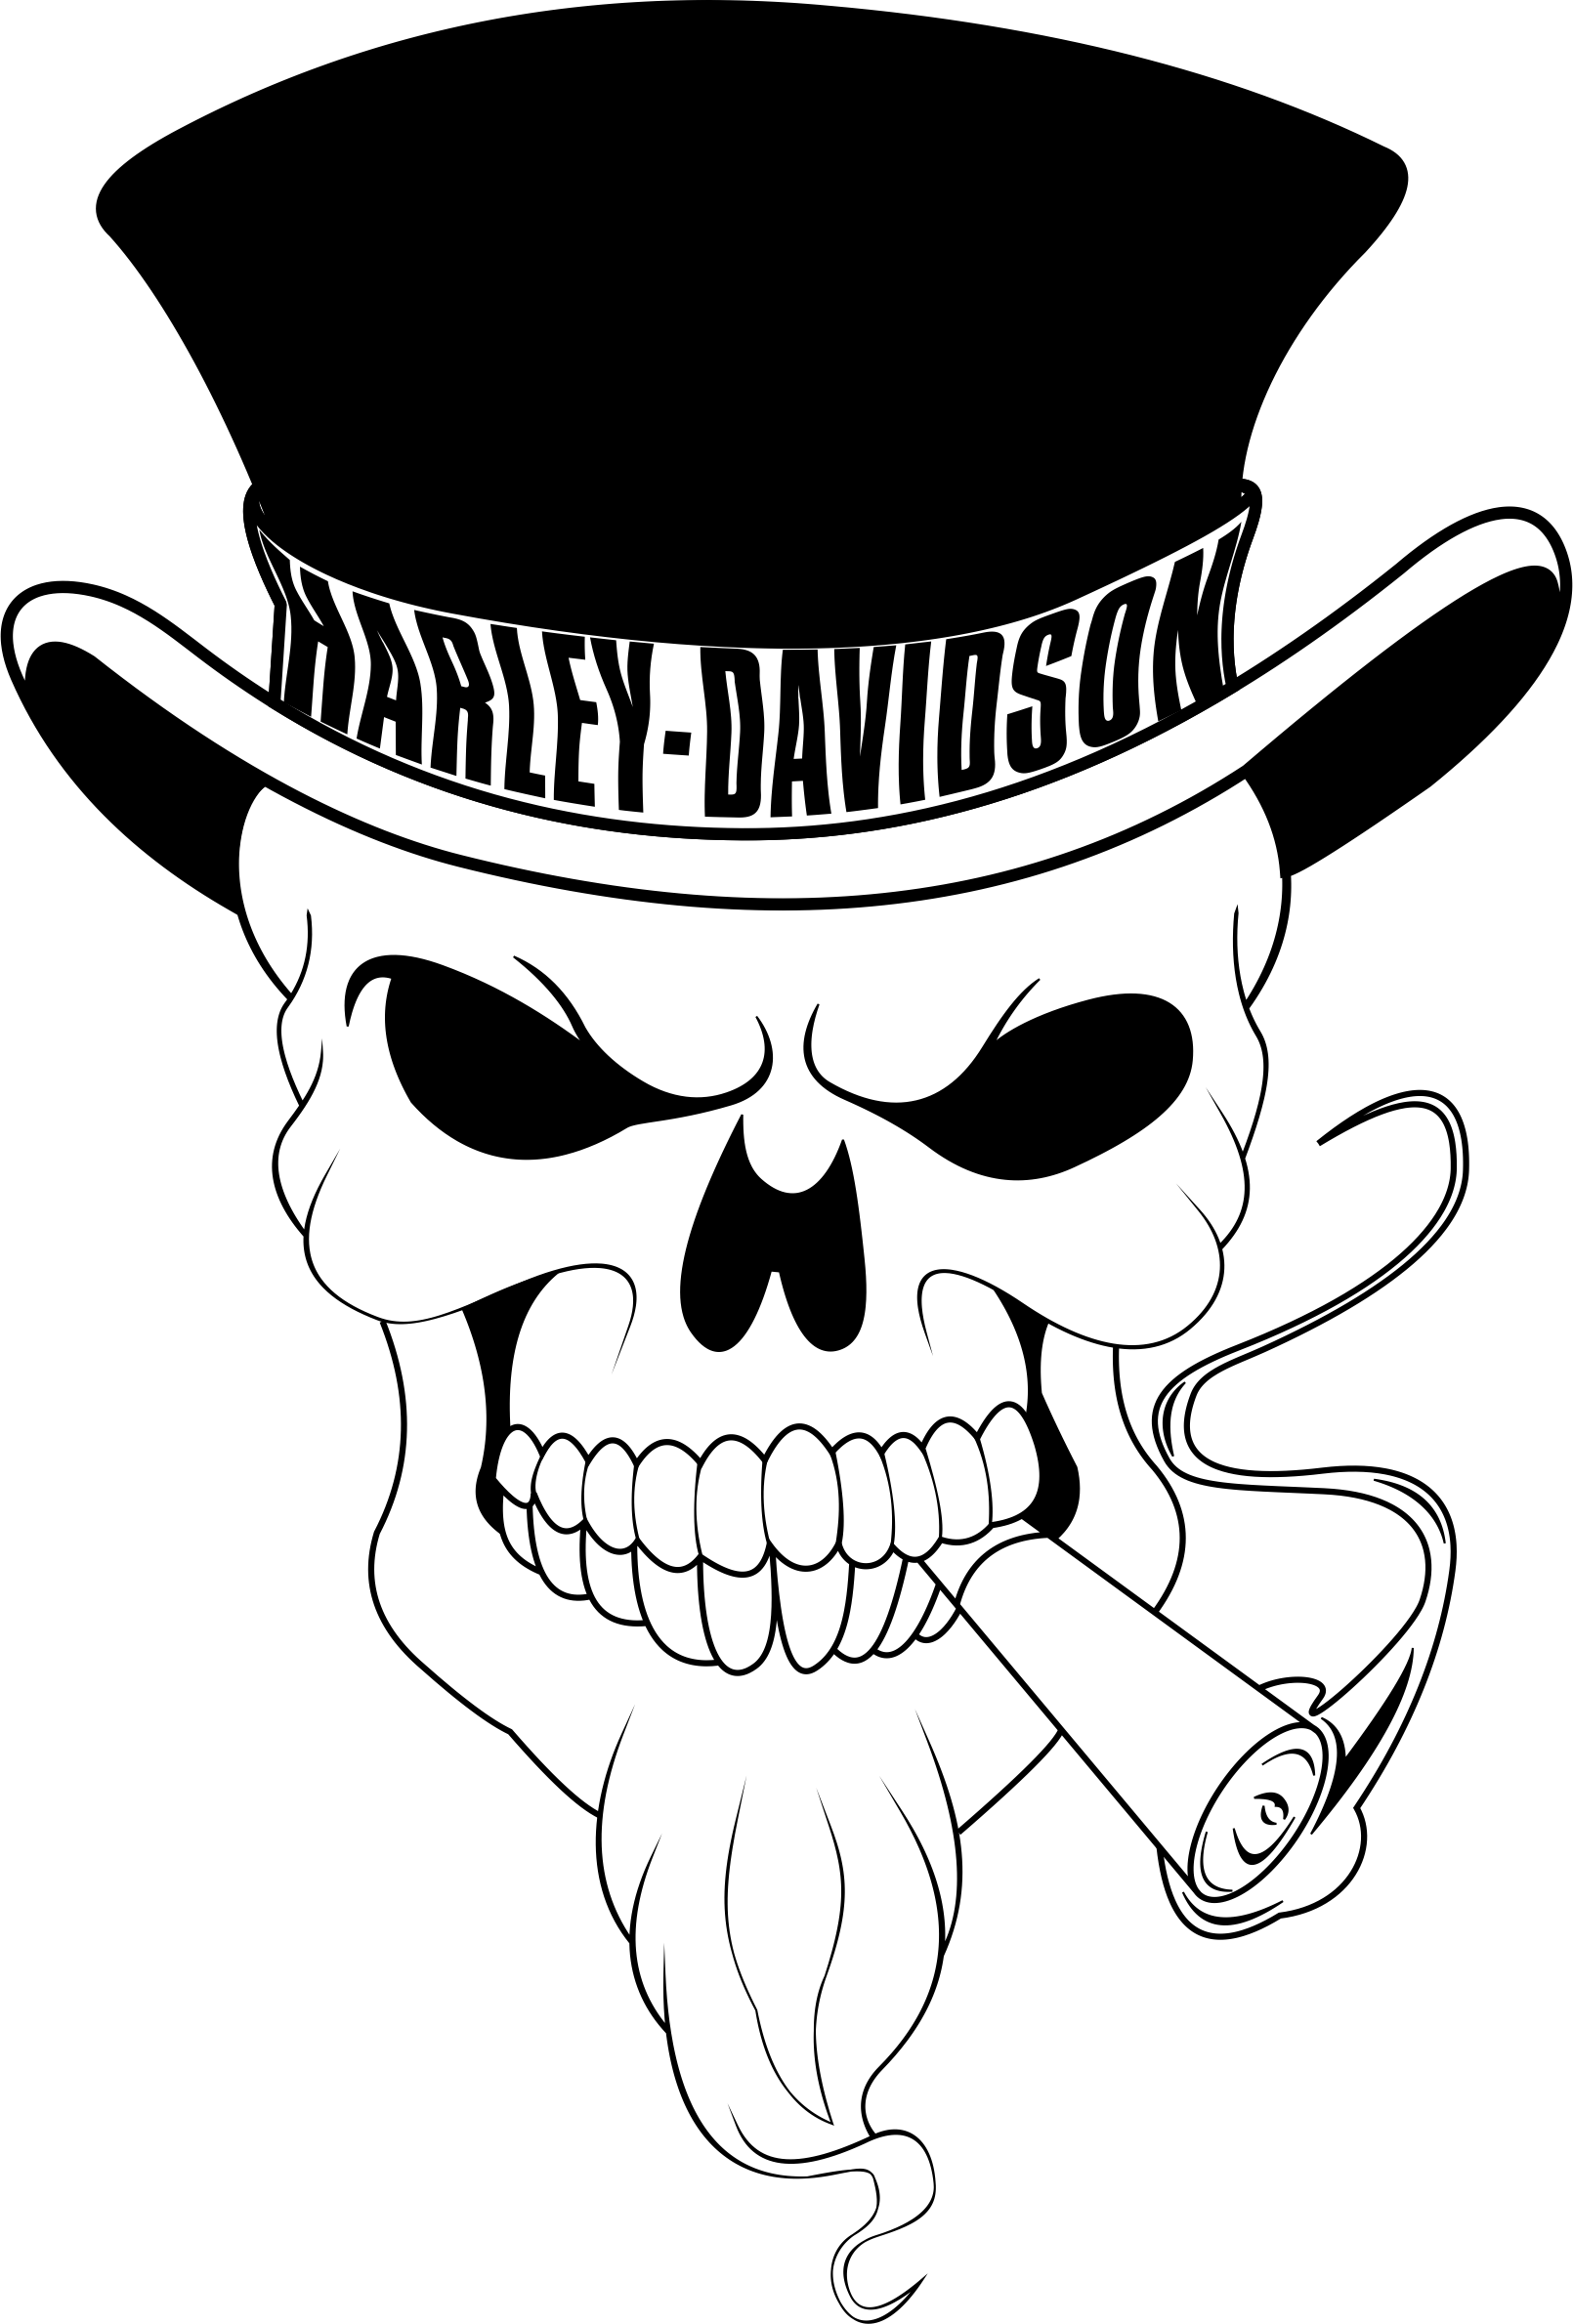 Ssckull Clipart Harley - Skull Harley Davidson Logo - Free Transparent